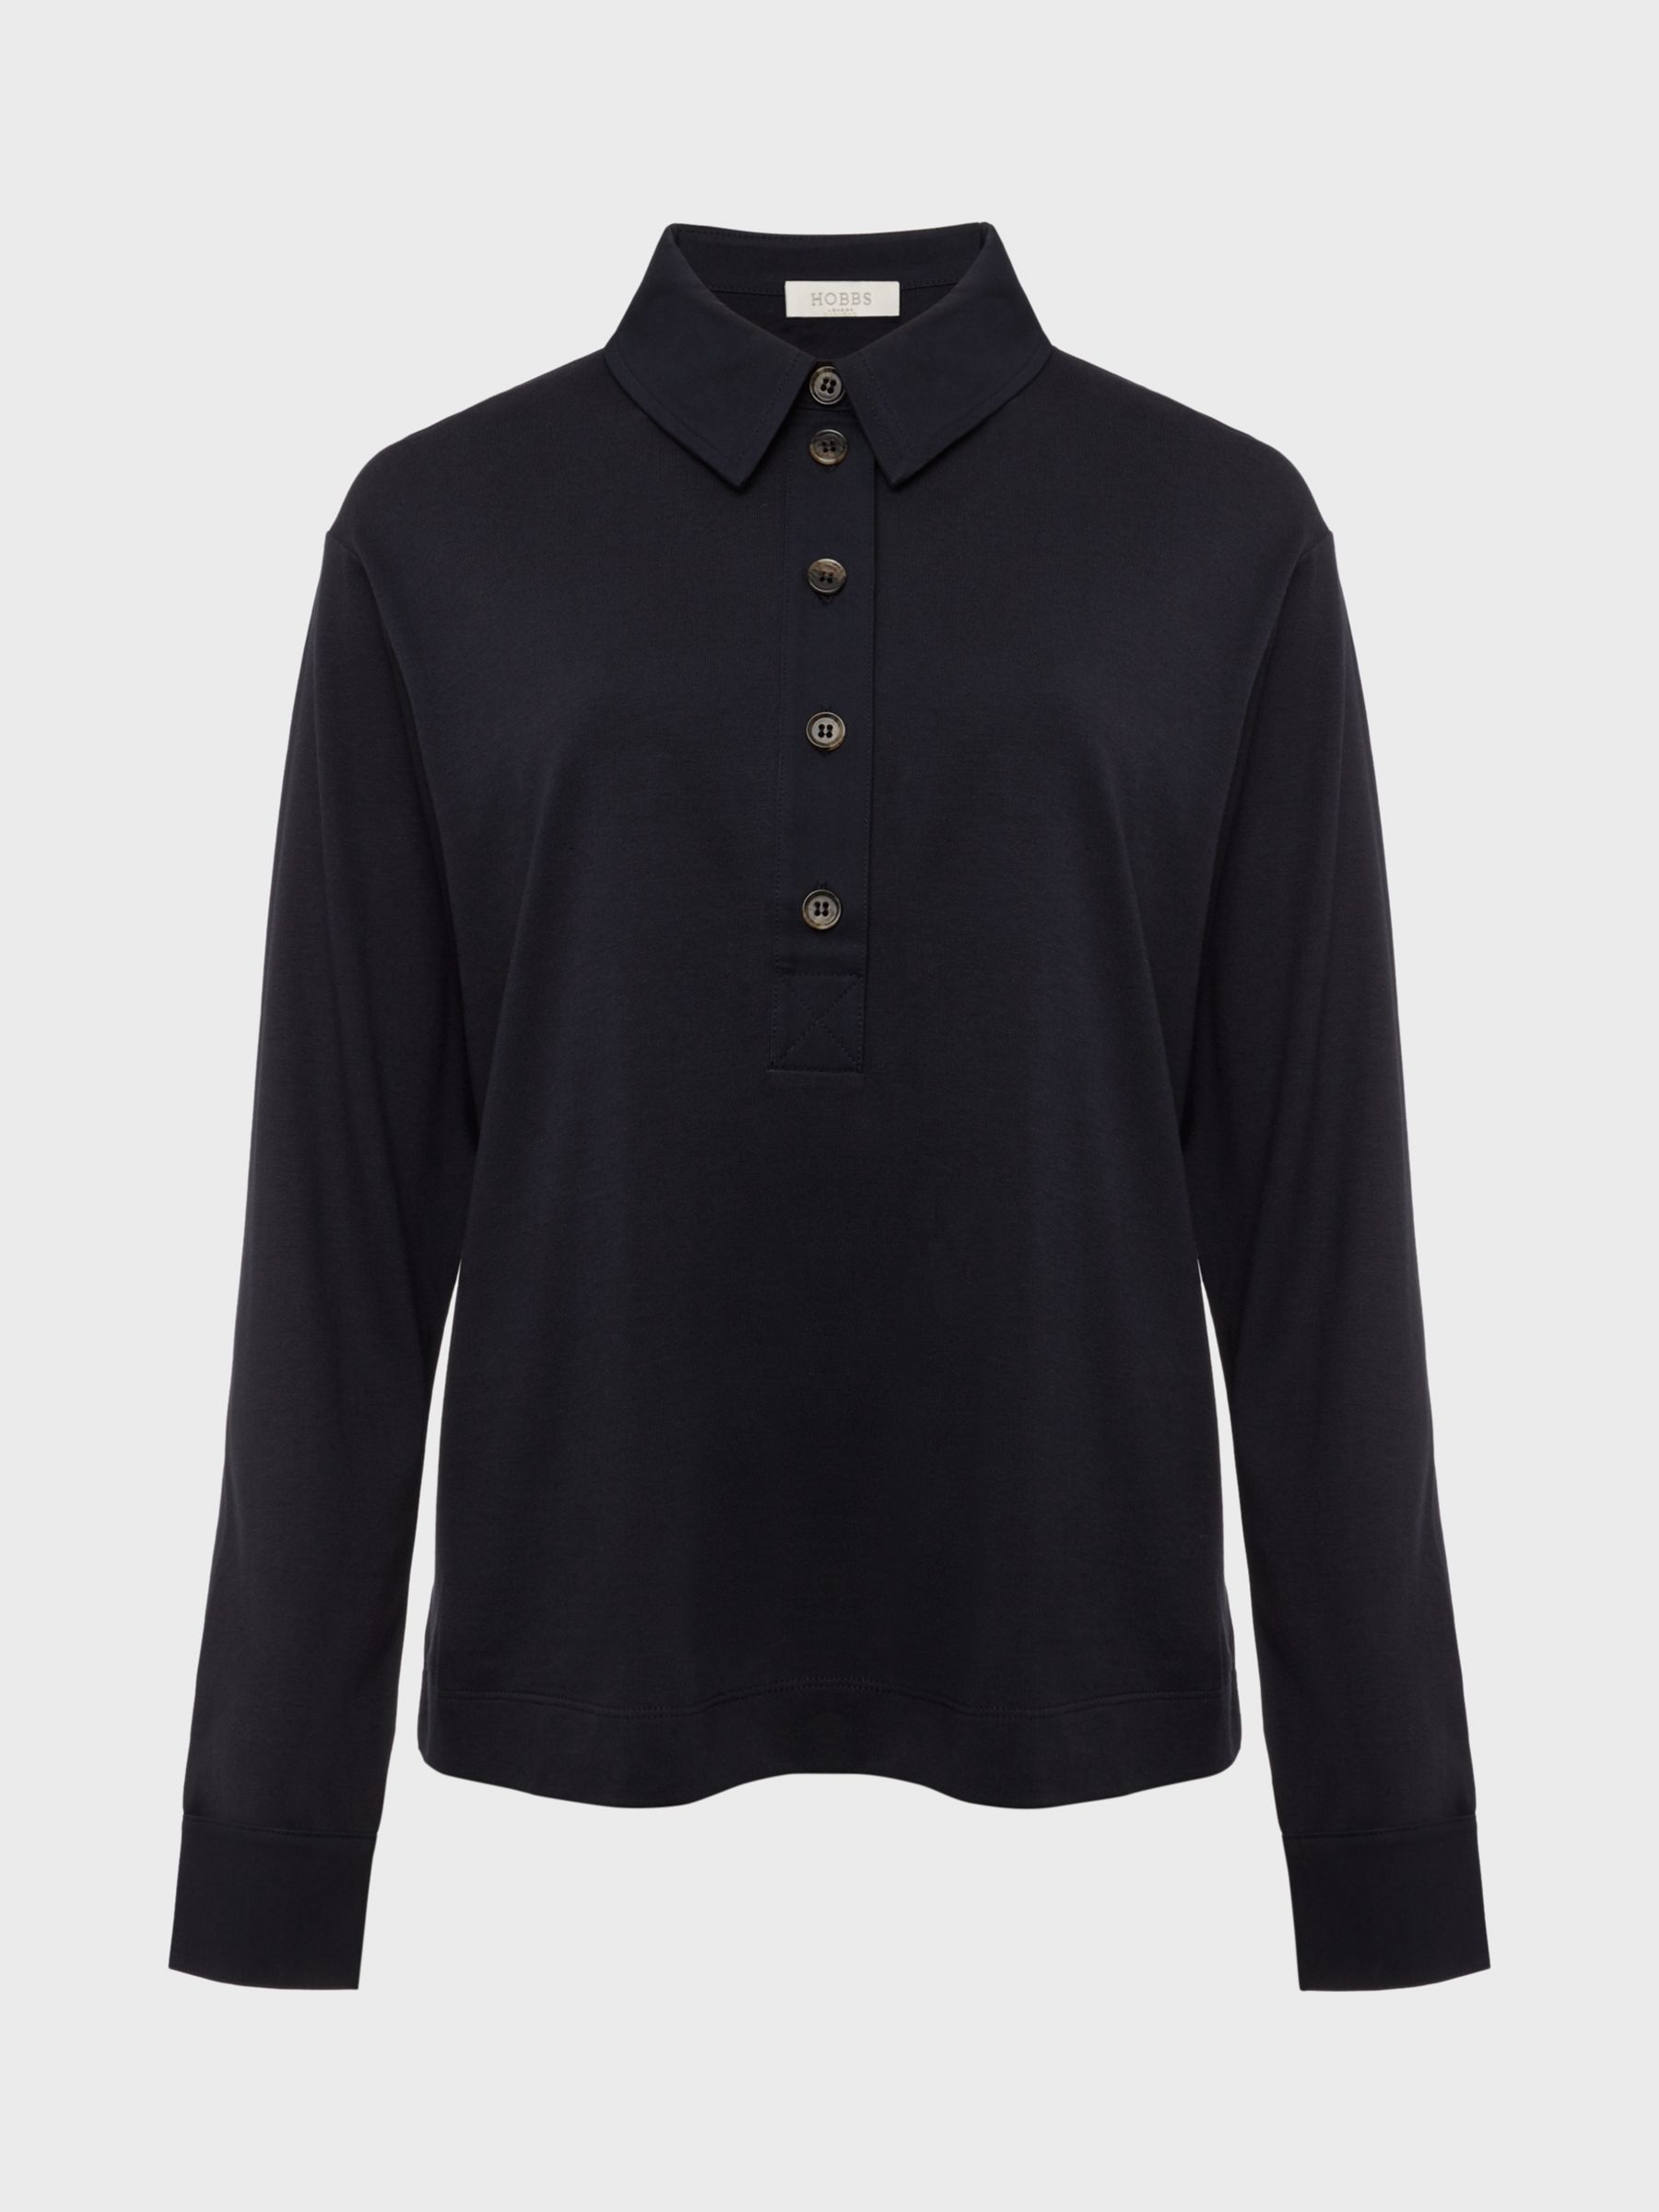 Hobbs Lillie Long Sleeve Polo Shirt, Navy at John Lewis & Partners